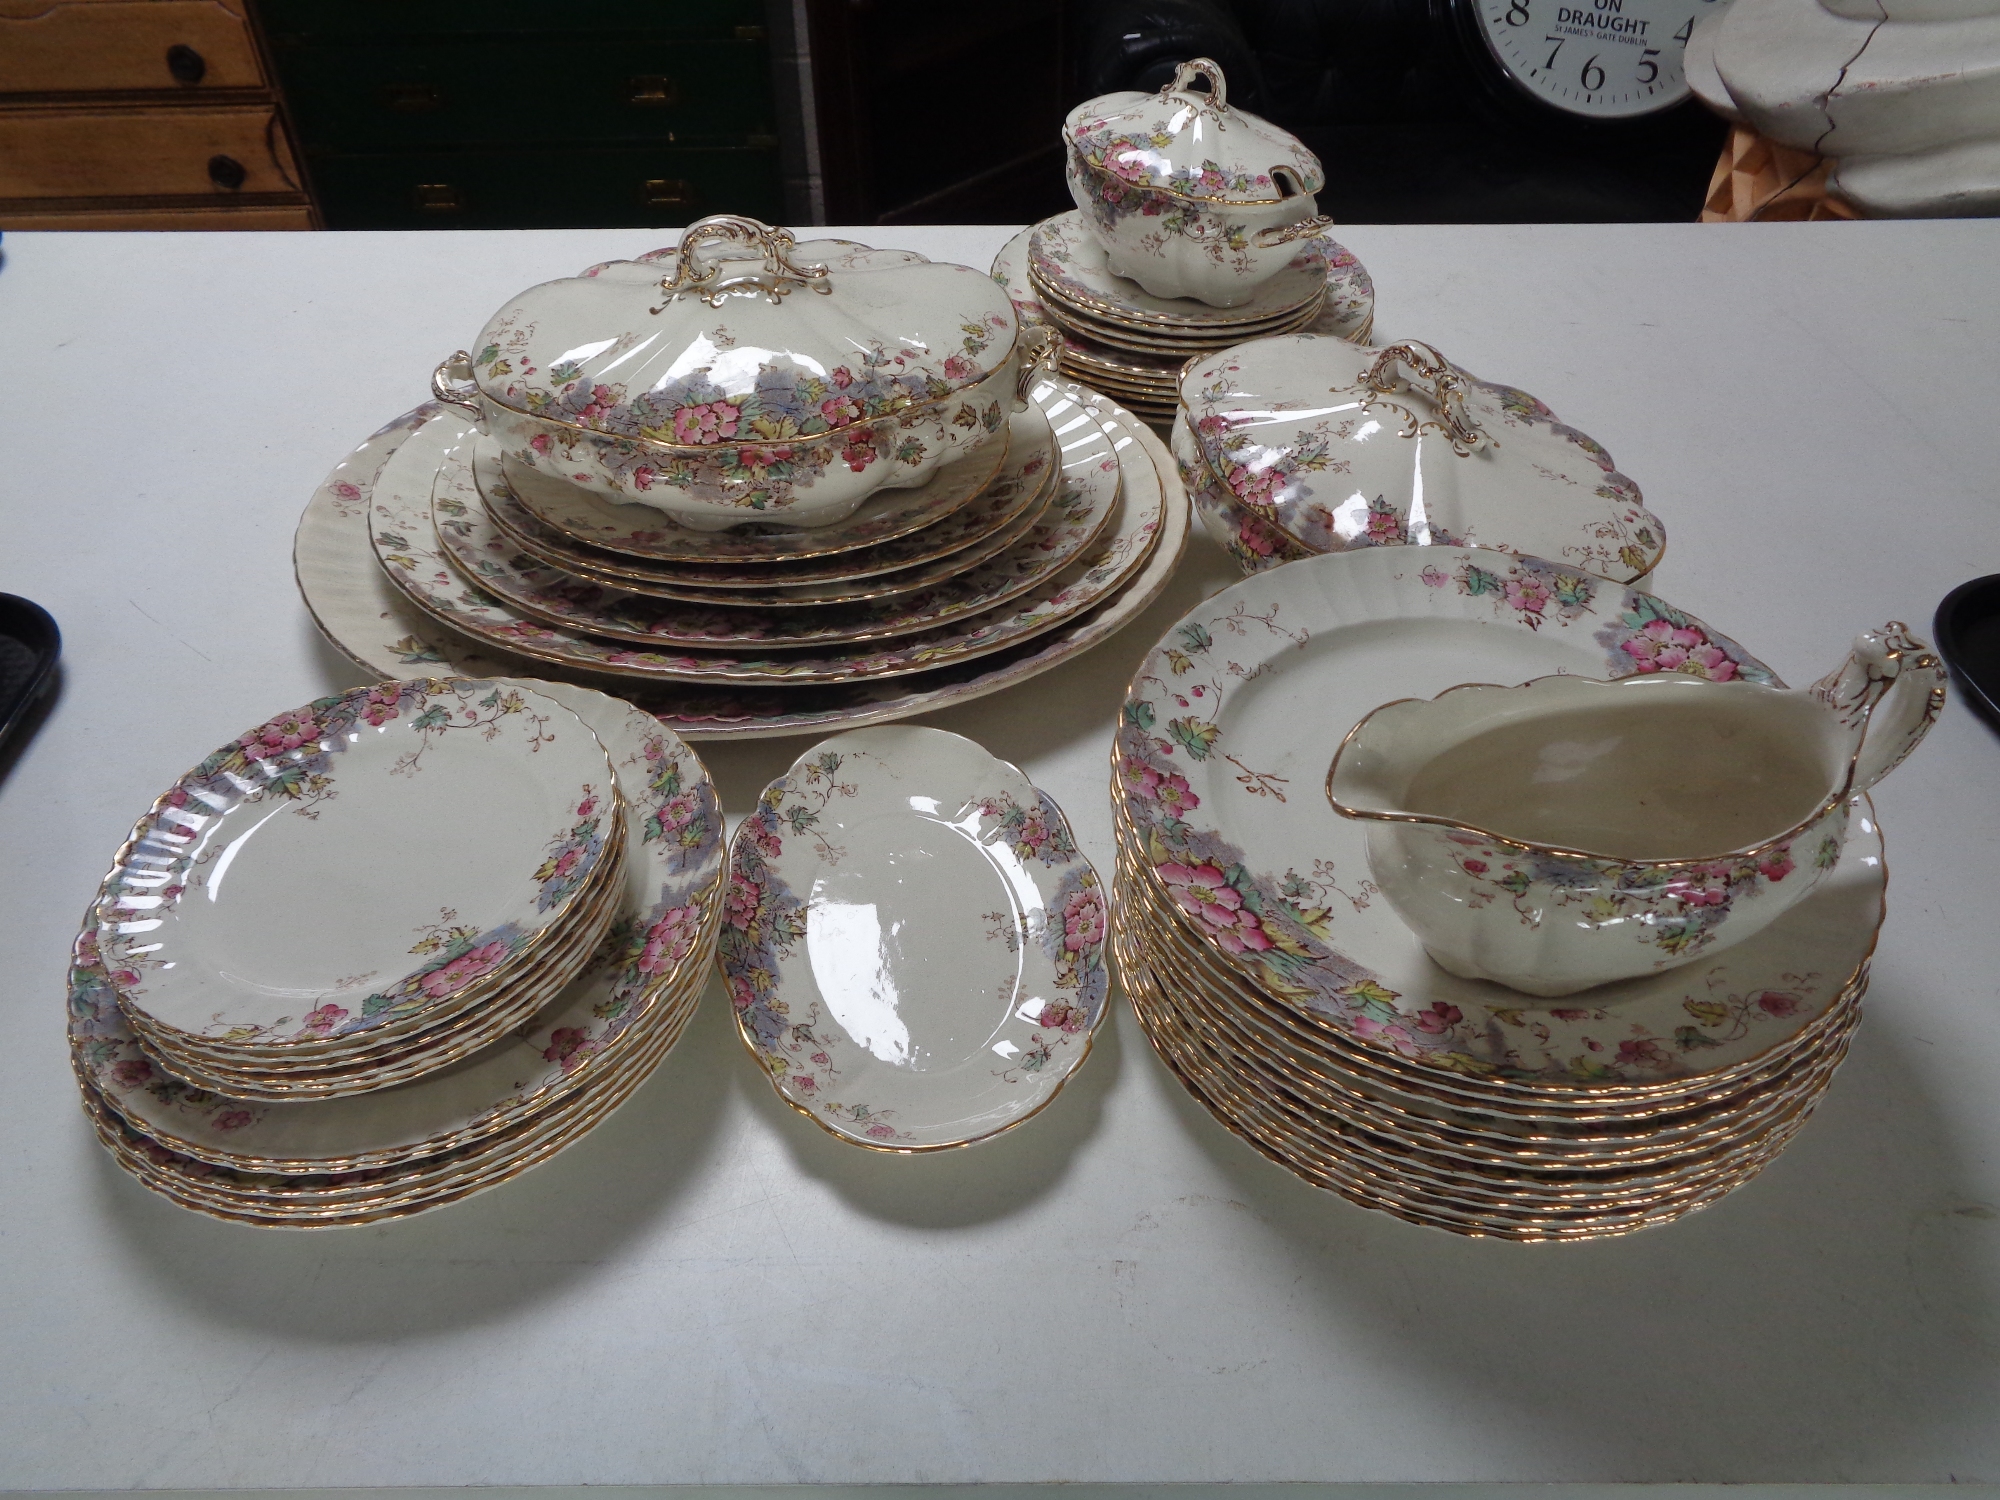 46 pieces of antique Montrose dinner ware